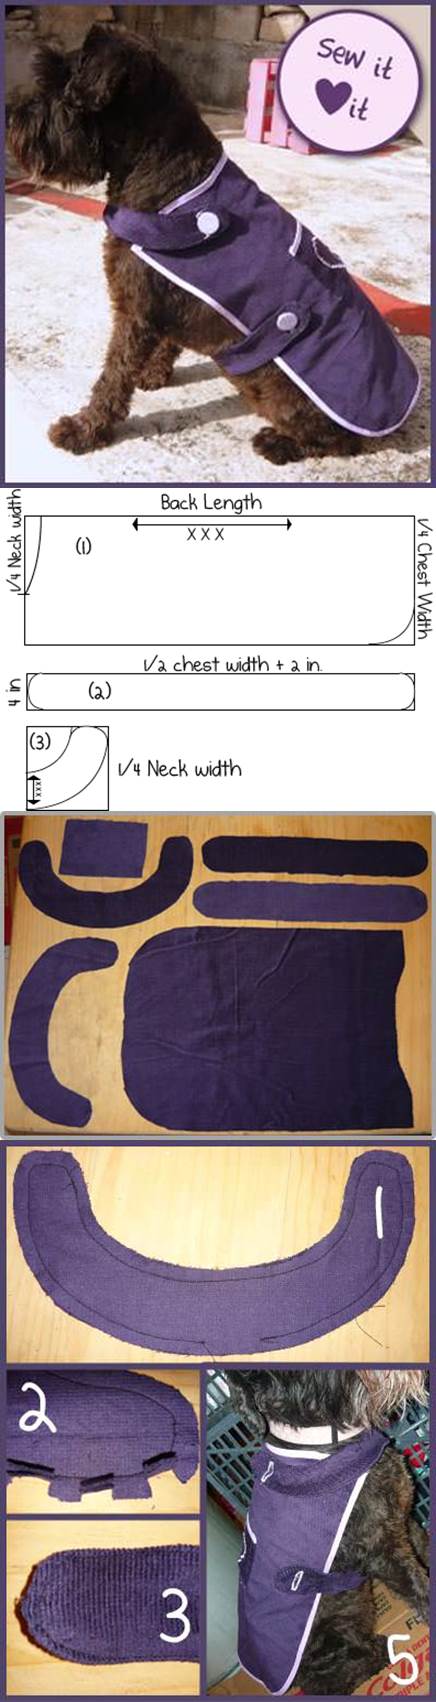 DIY easy sew dog coat 2